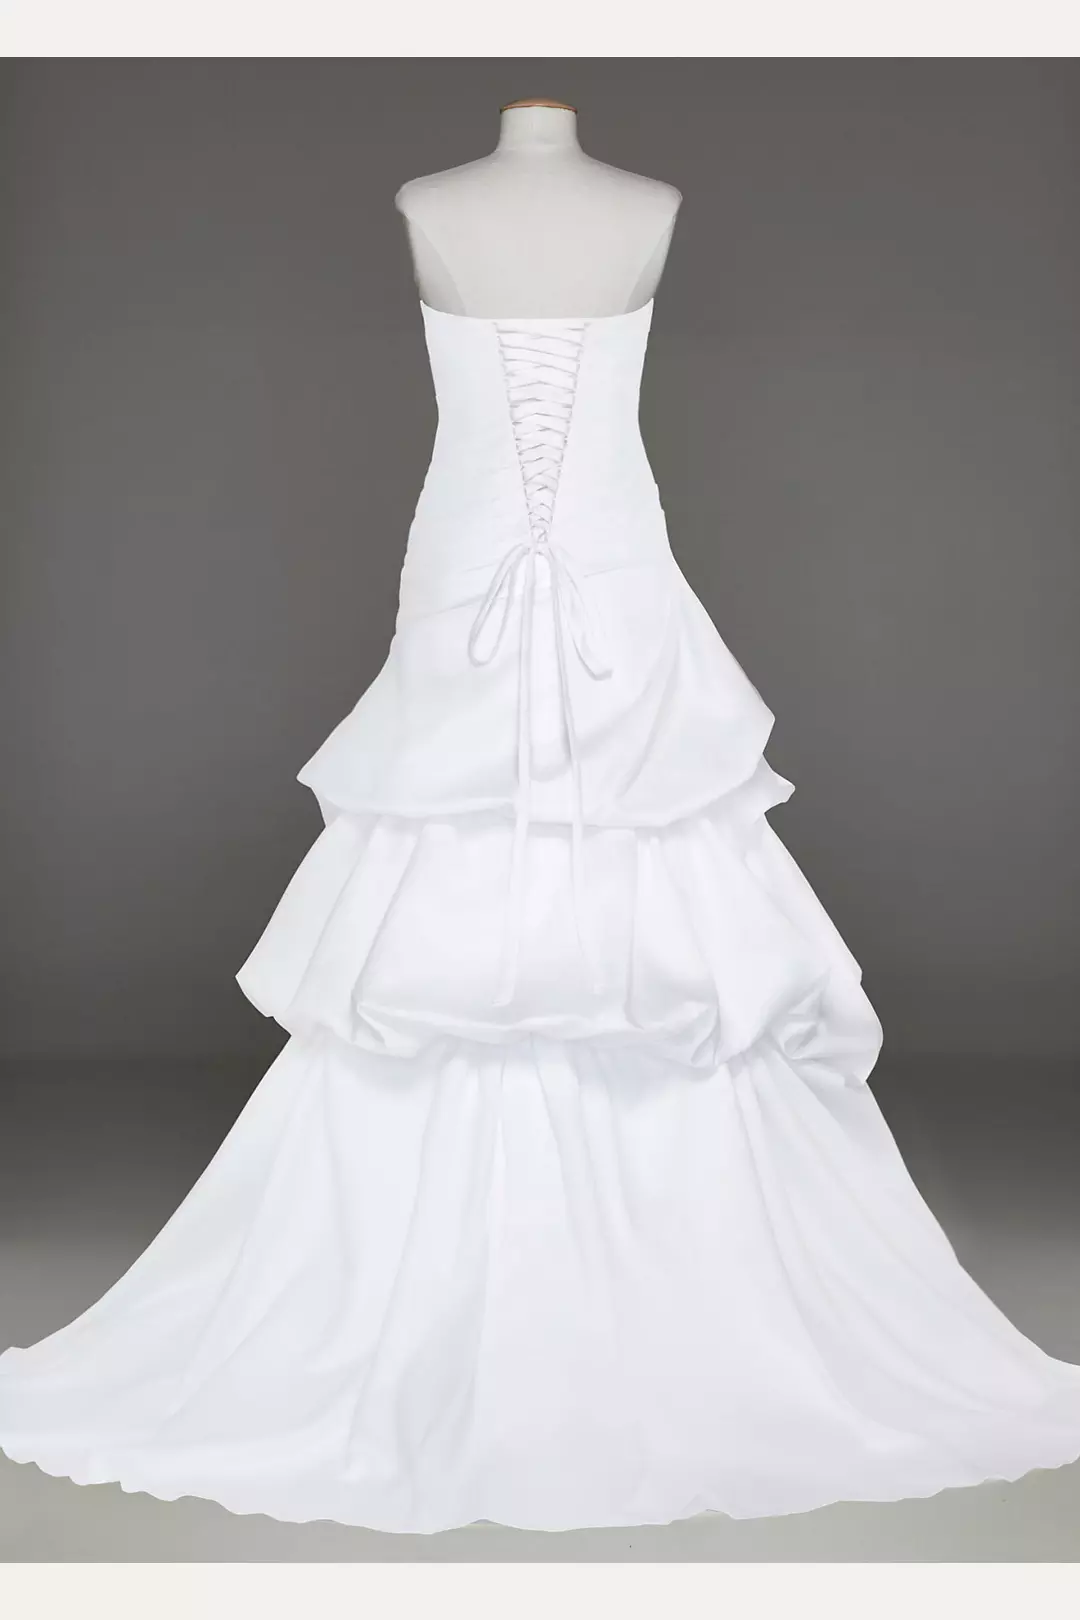 Dropped Waist Strapless Sweetheart Wedding Dress  Image 3